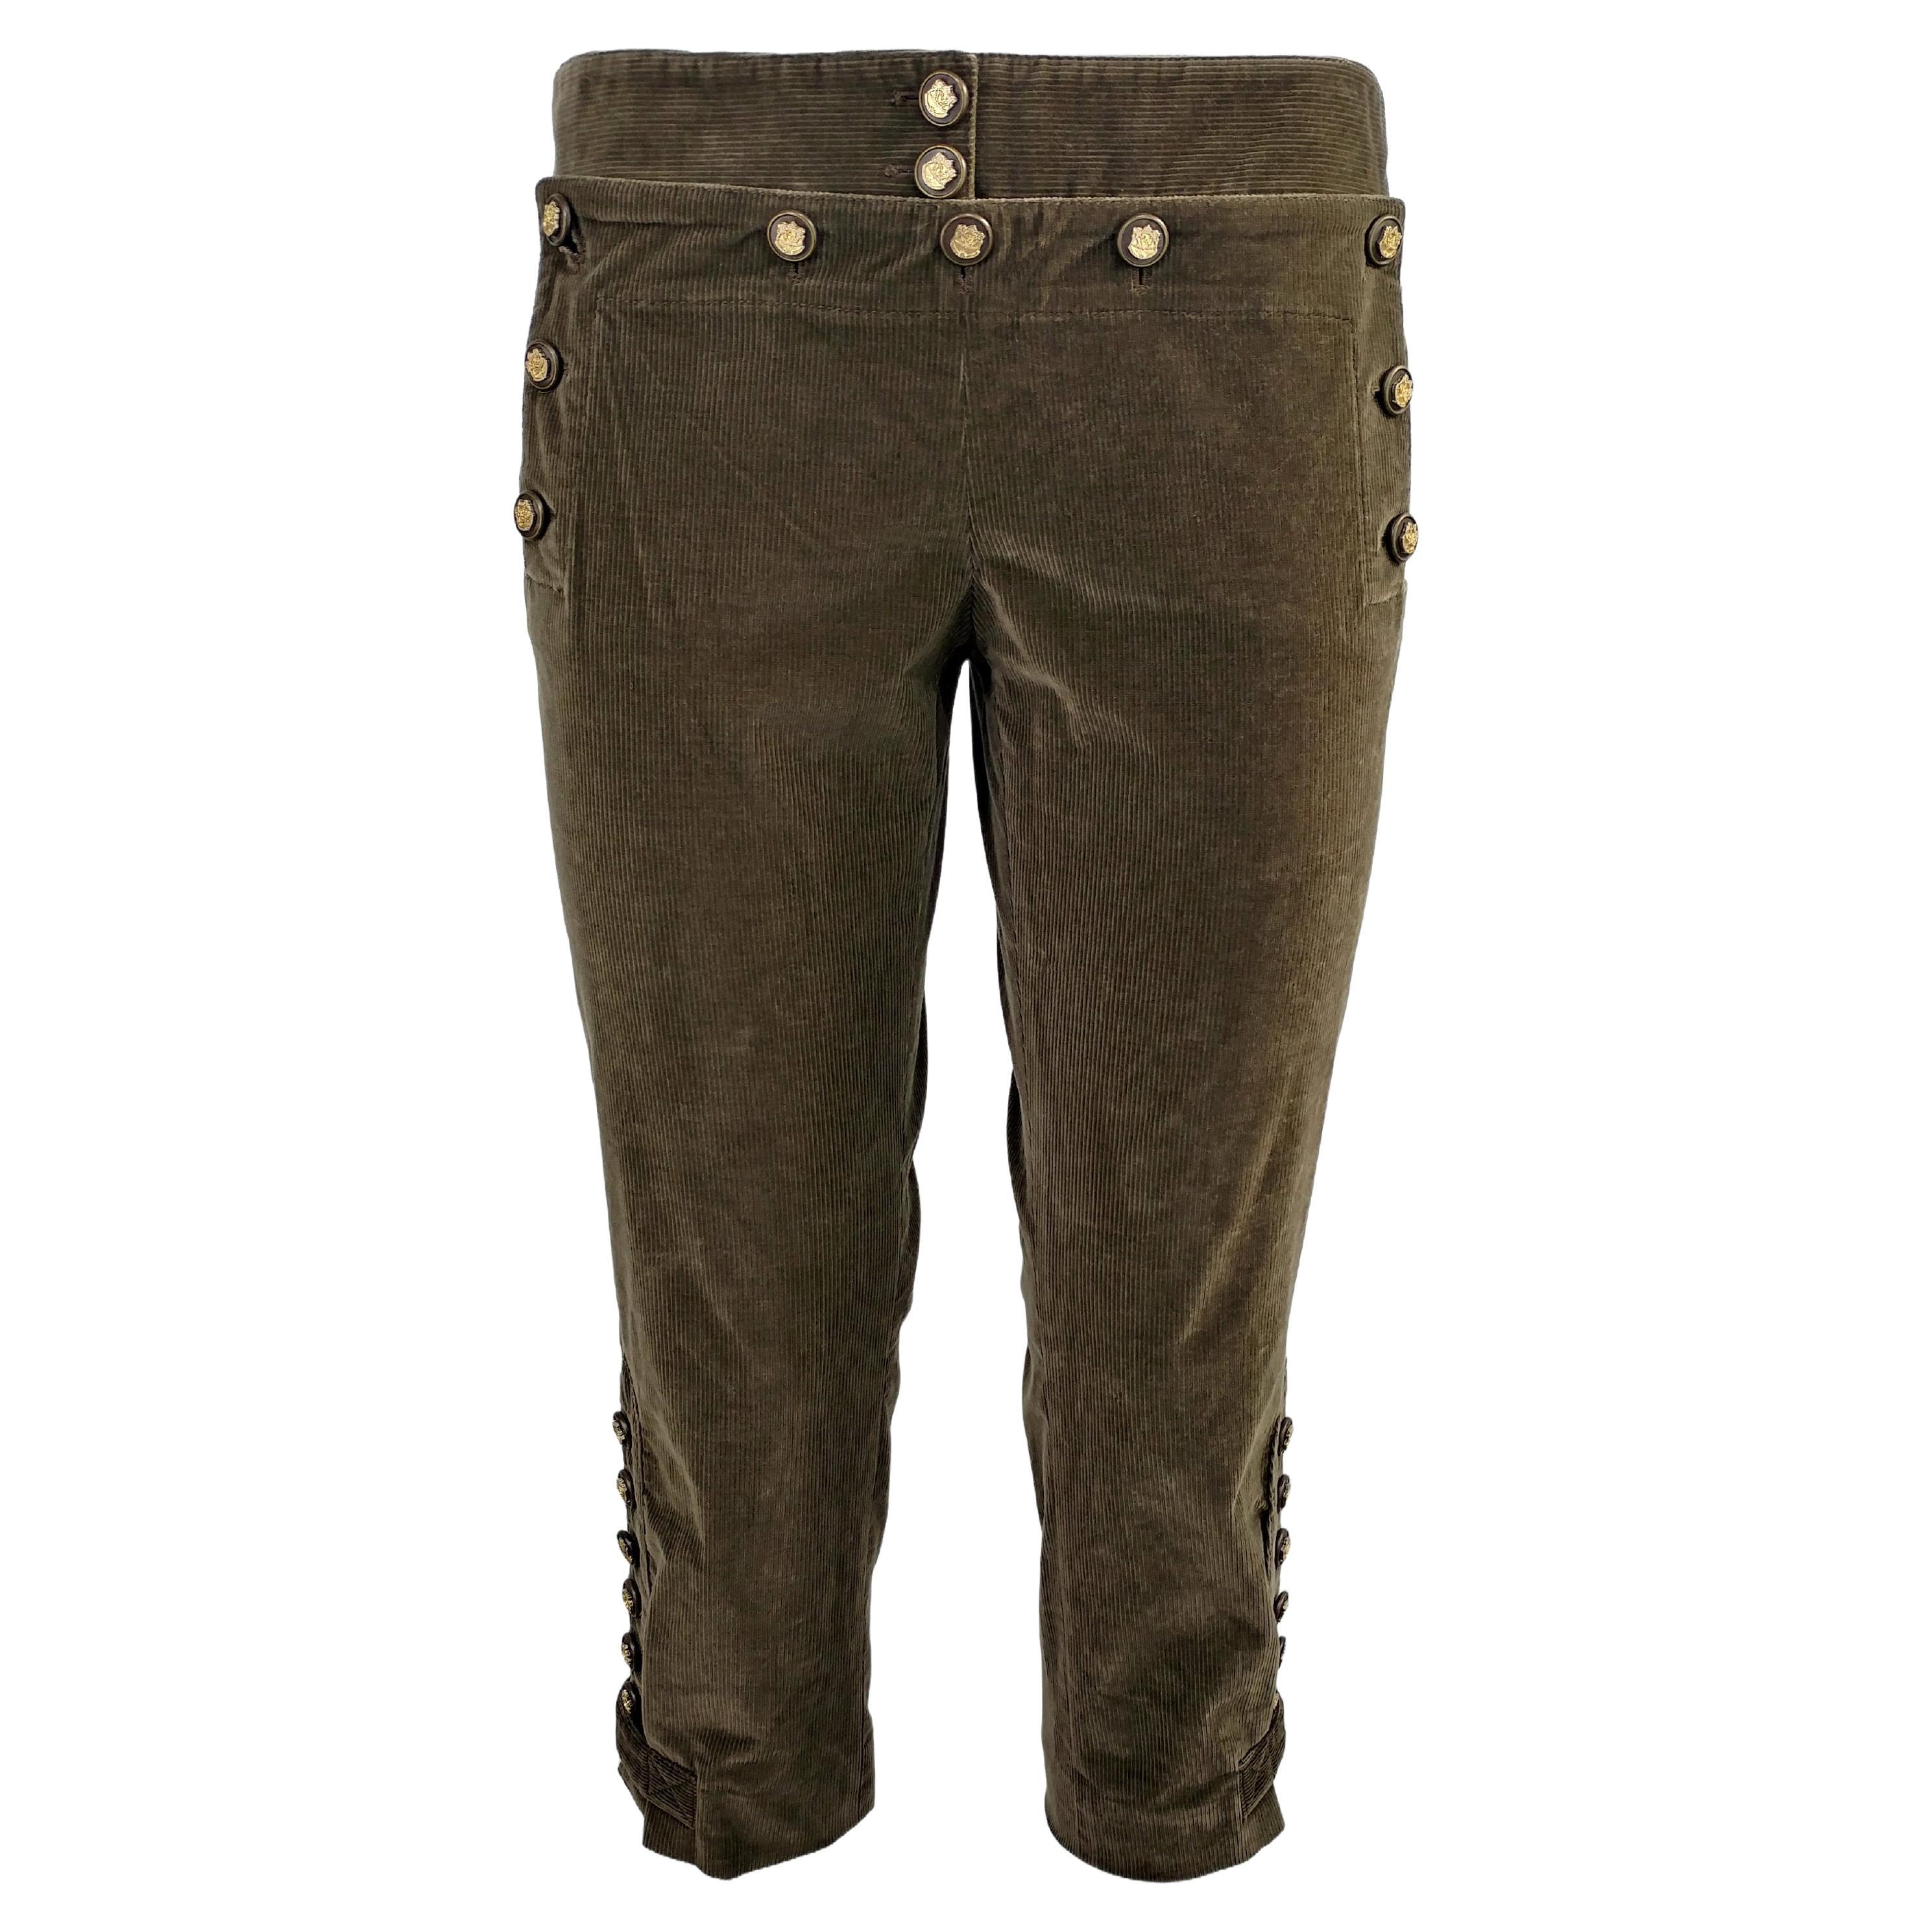 Vintage Corduroy Pants - 12 For Sale on 1stDibs